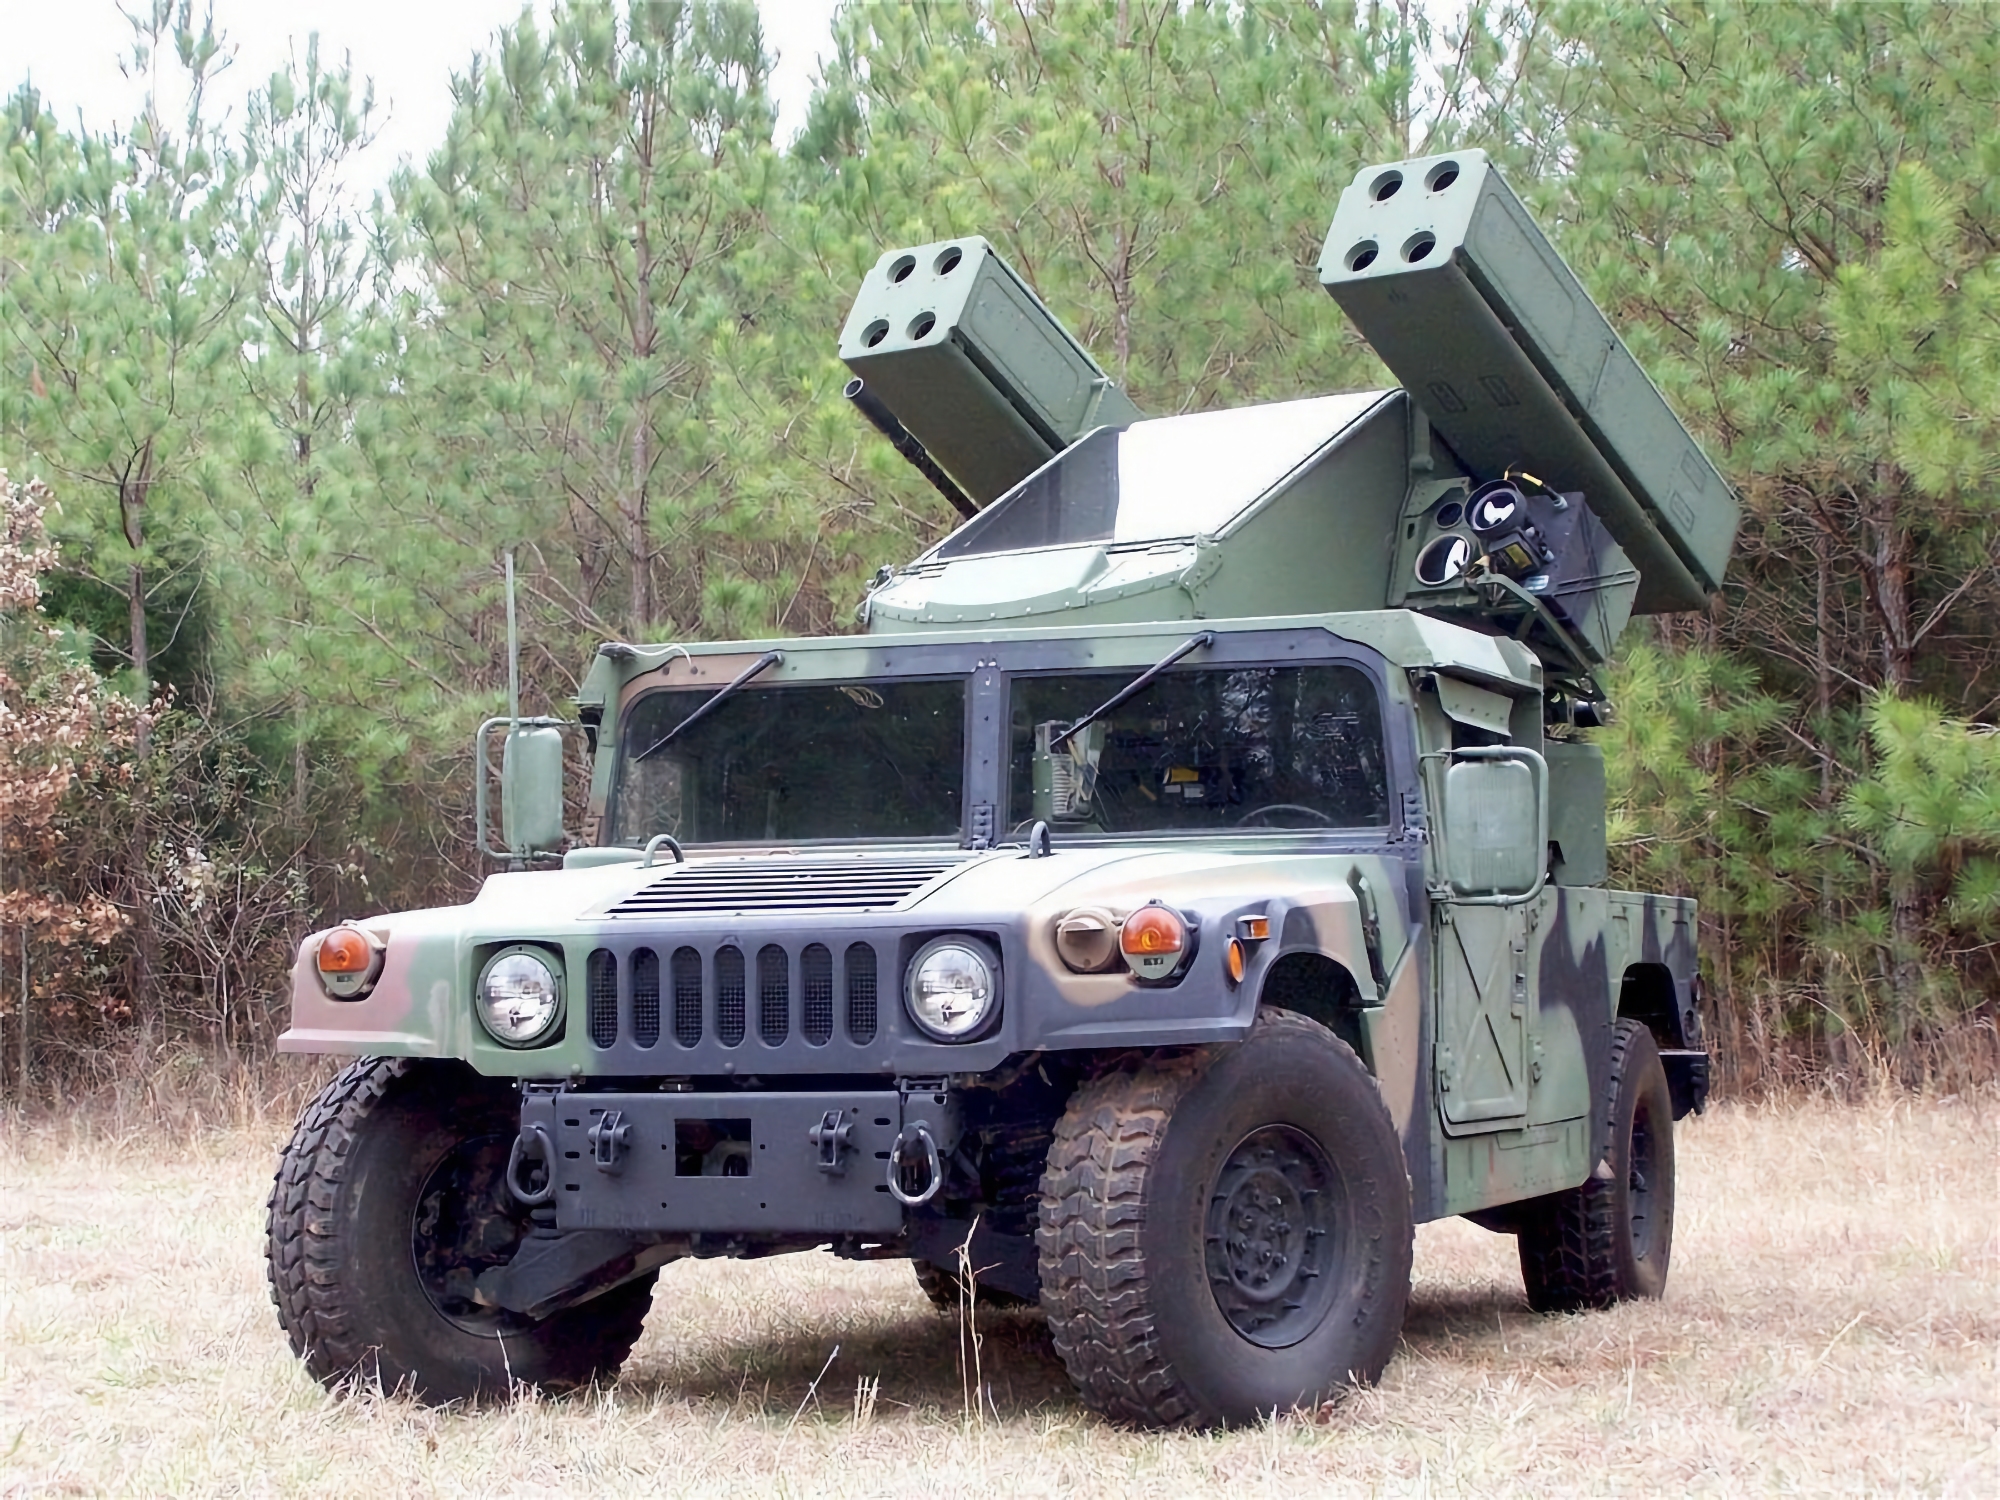 Las AFU reciben un SAM AN/TWQ-1 Avenger con misiles Stinger, capaz de destruir objetivos aéreos a una distancia de hasta 5,5 km.